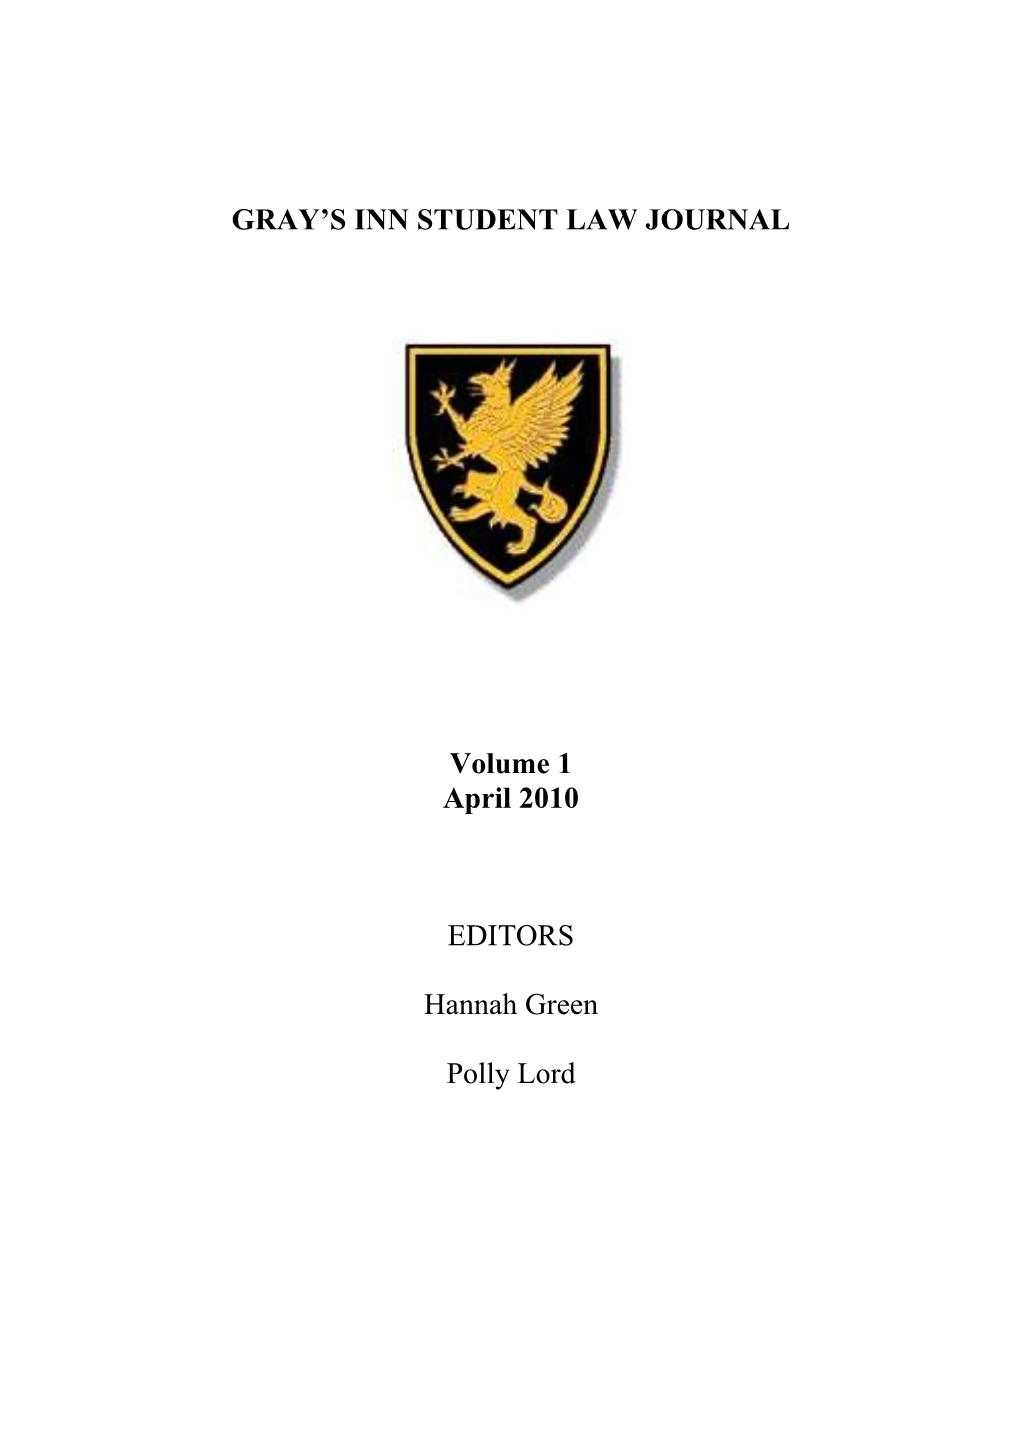 Student Law Journal, Volume I